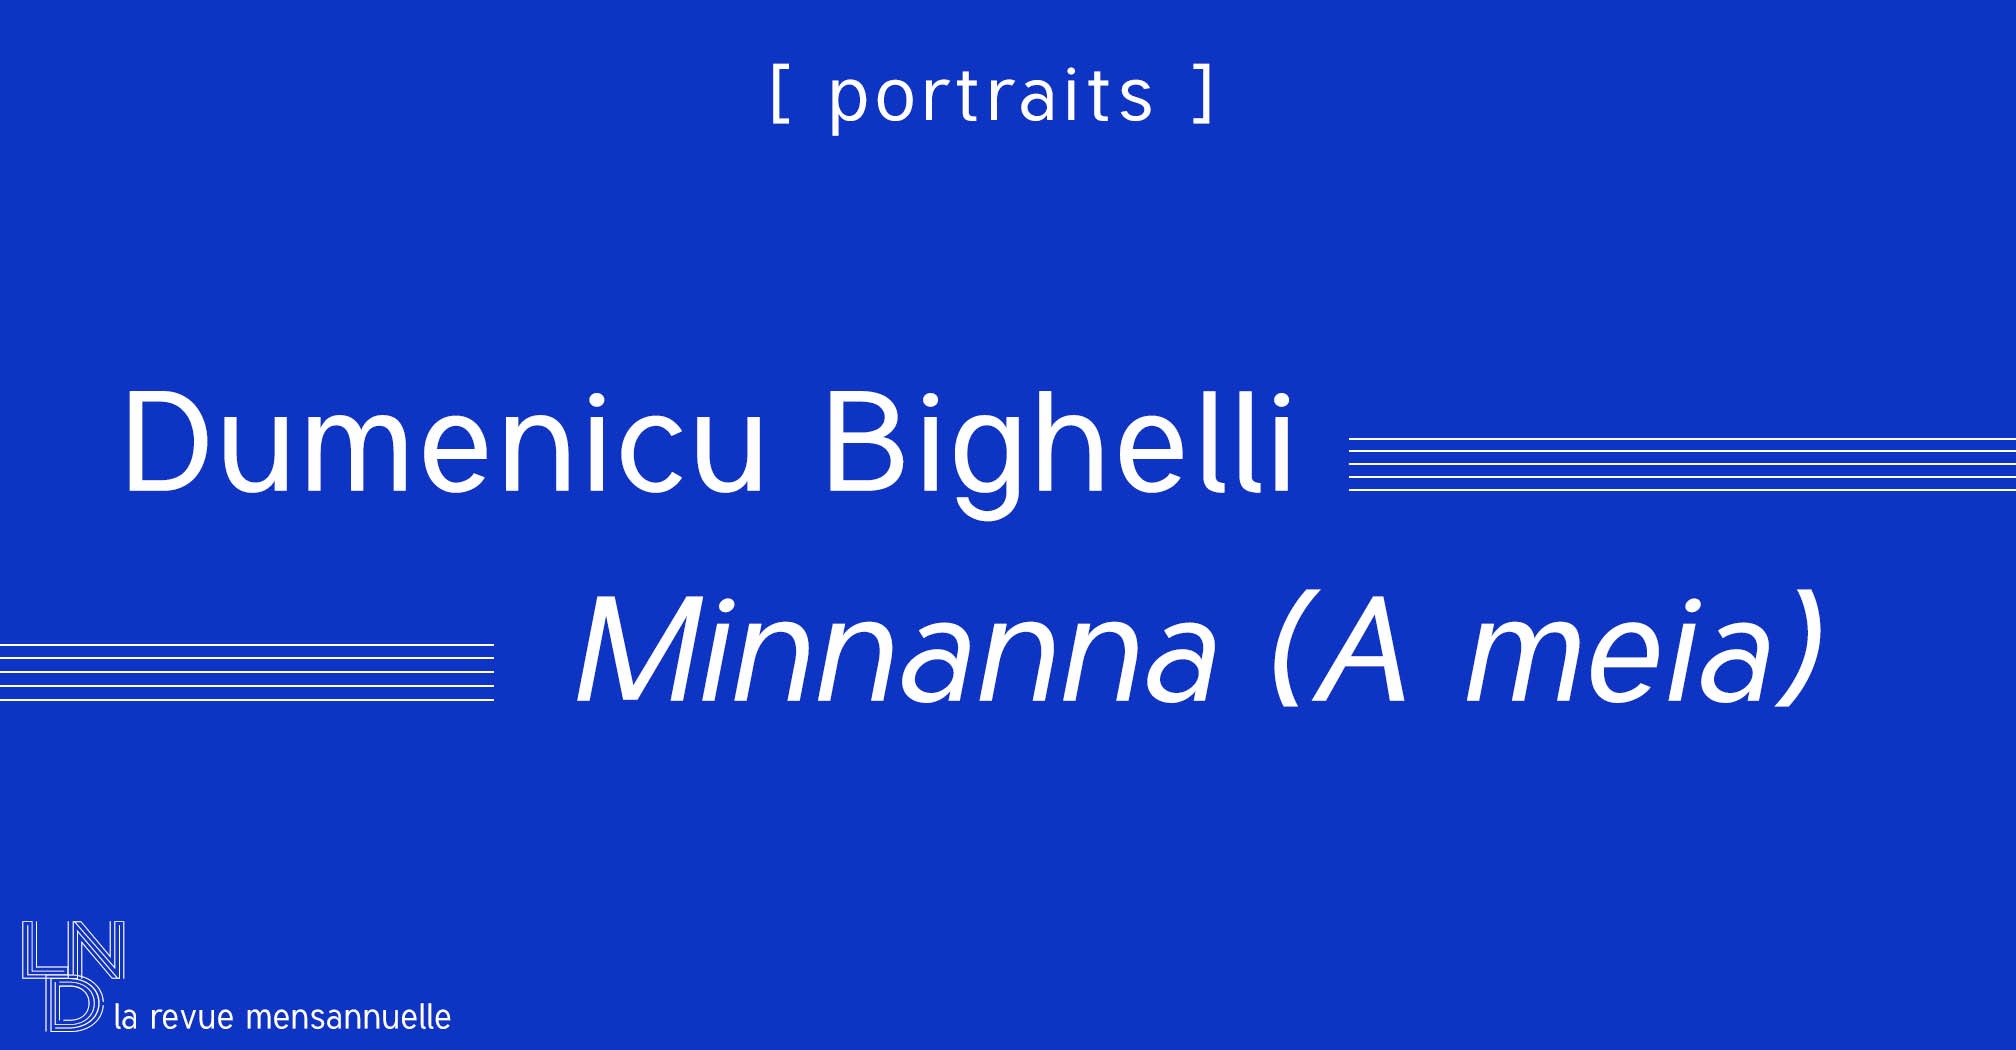 [Portraits] - Minnanna (A meia) - Dumenicu Bighelli